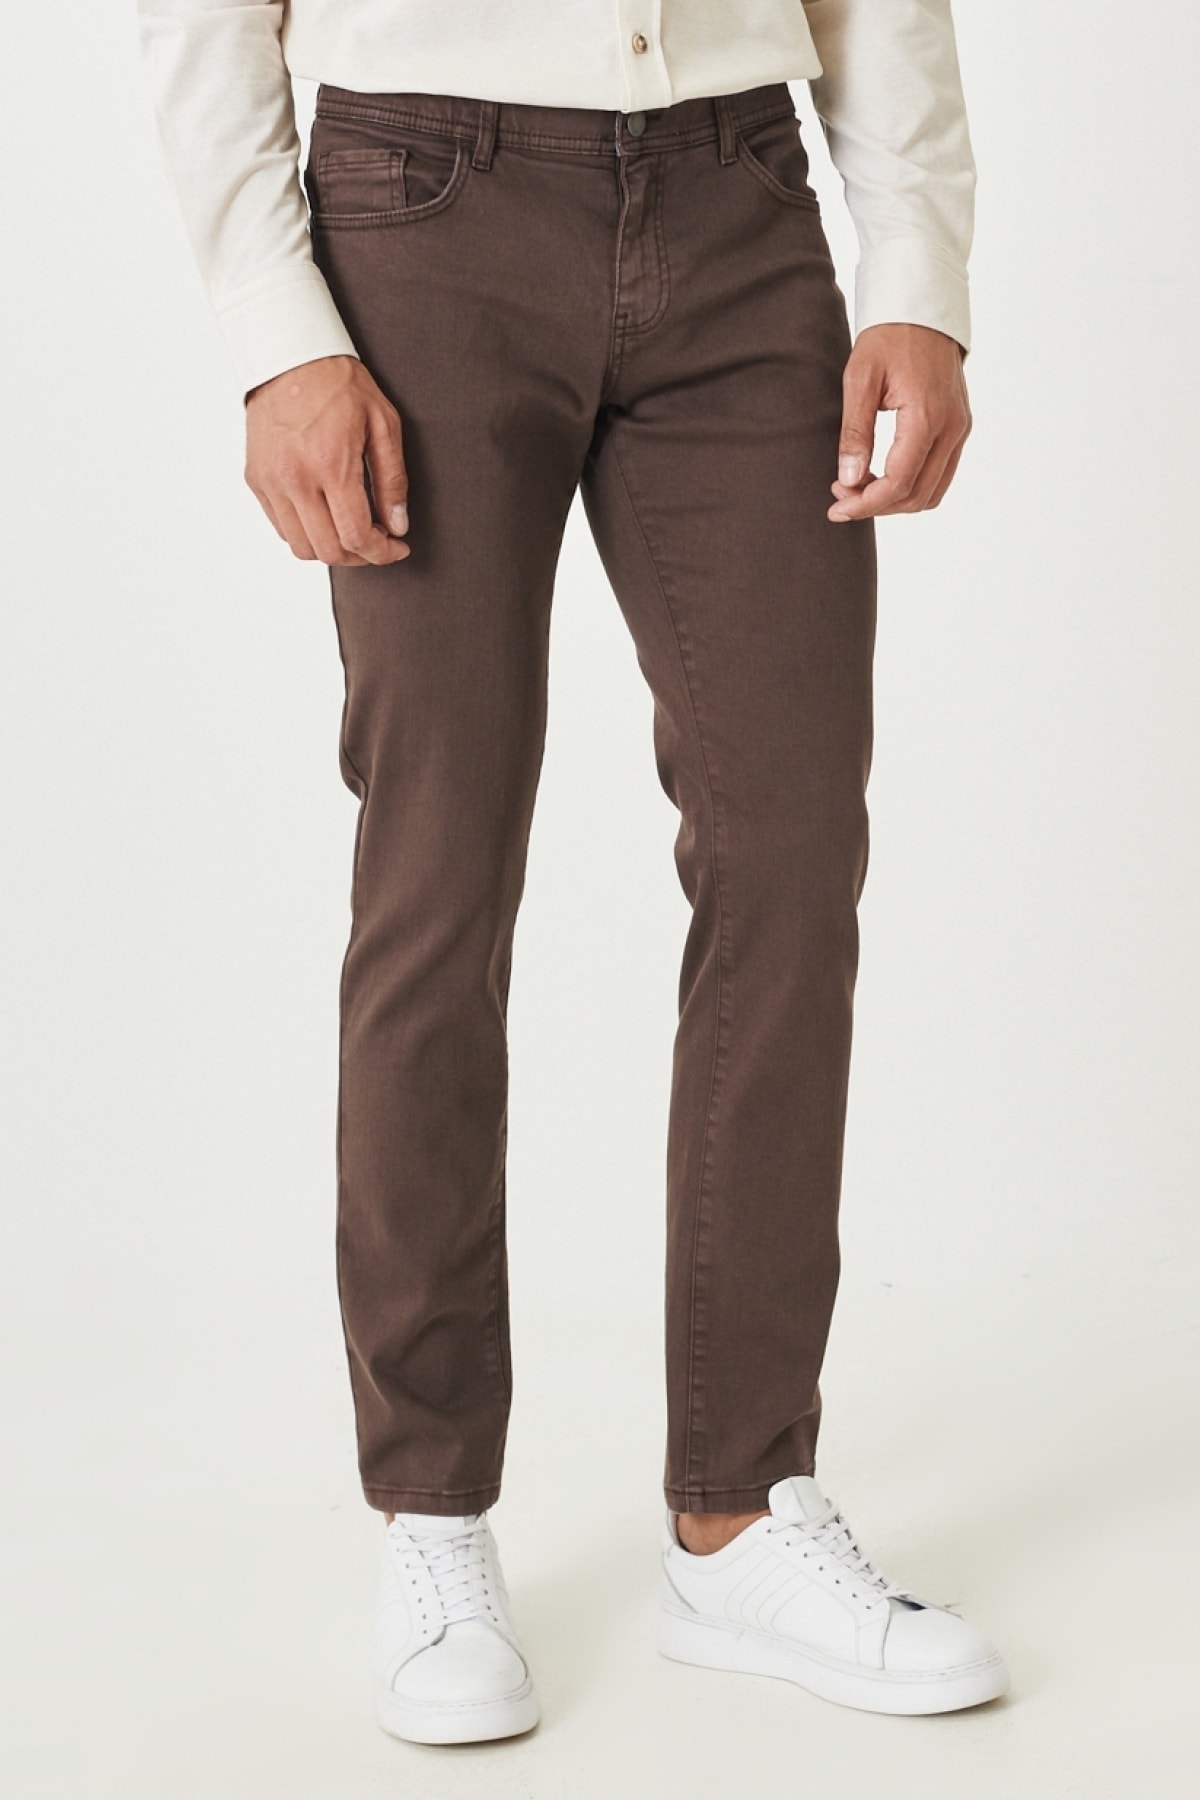 Levně ALTINYILDIZ CLASSICS Men's Brown Casual Slim Fit Slim-fit Pants that Stretch 360 Degrees in All Directions.